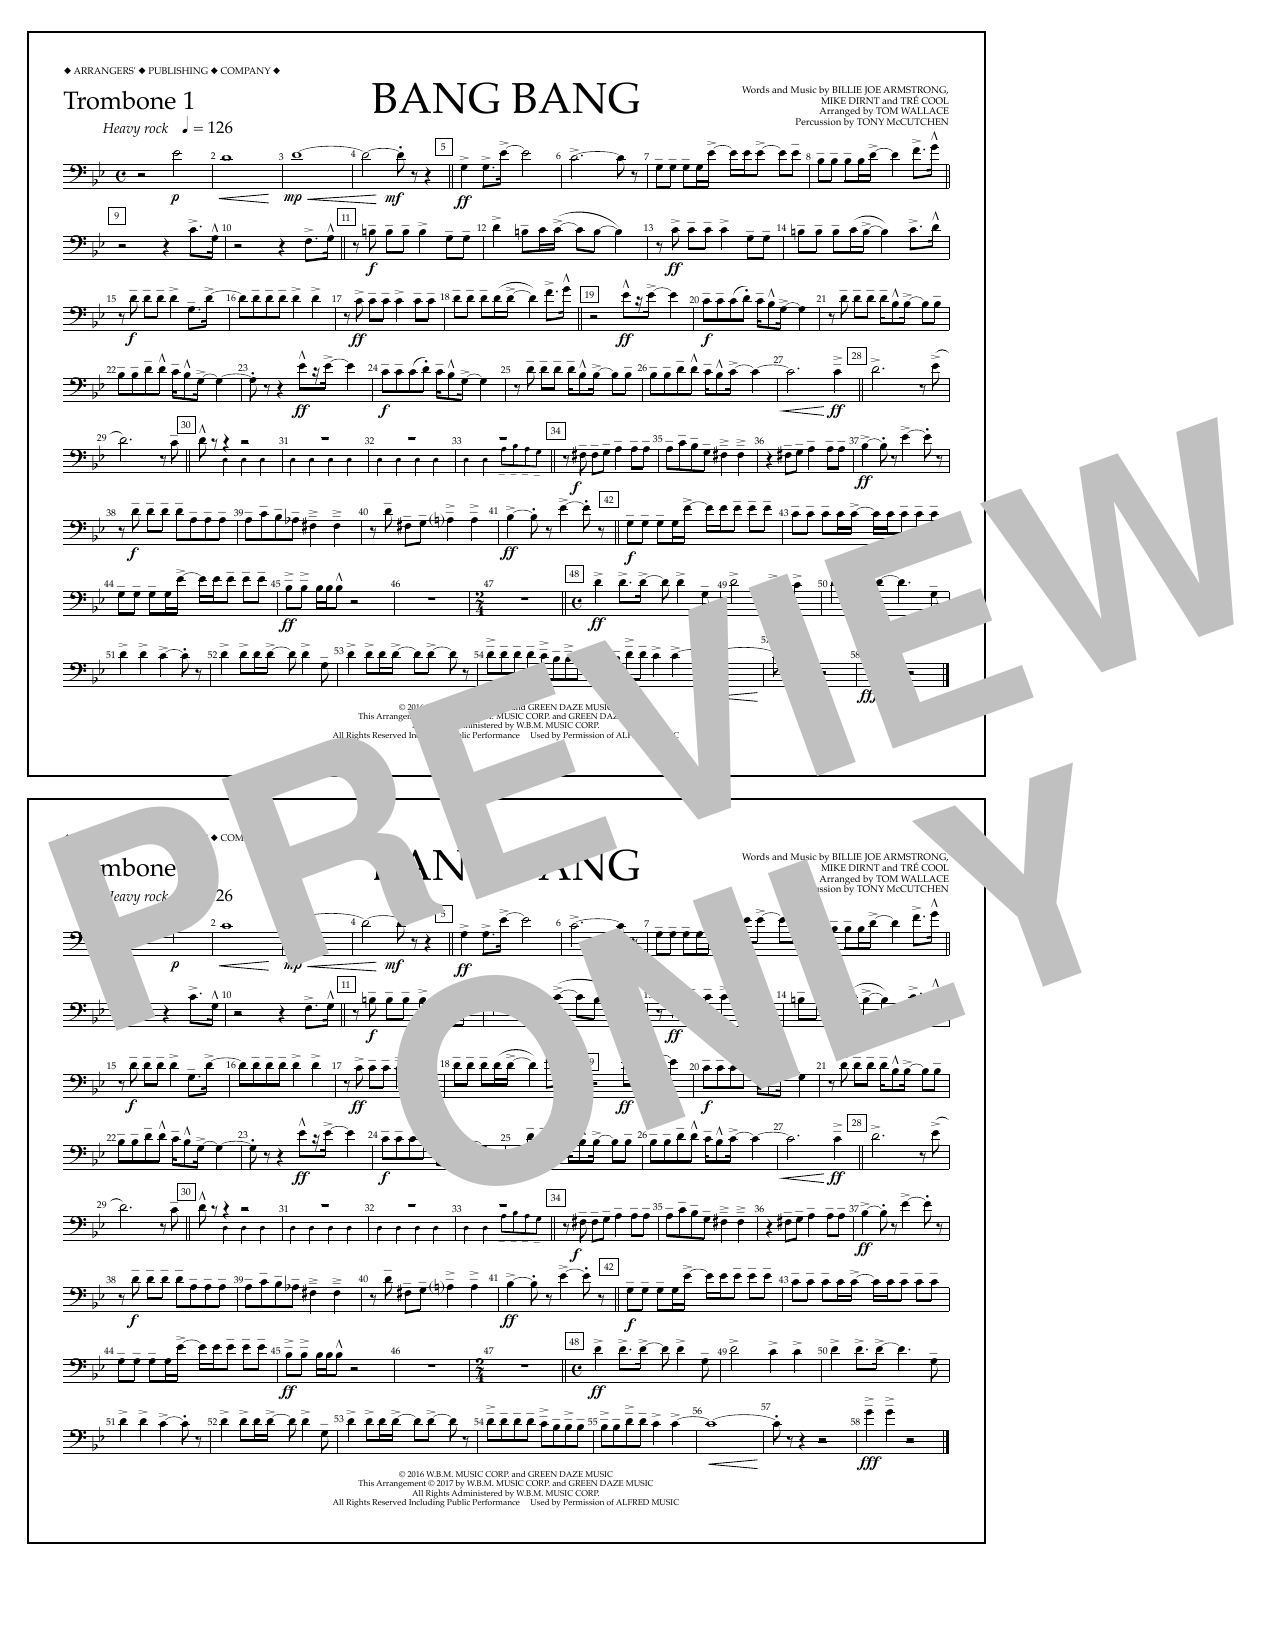 Tom Wallace Bang Bang - Trombone 1 Sheet Music Notes & Chords for Marching Band - Download or Print PDF